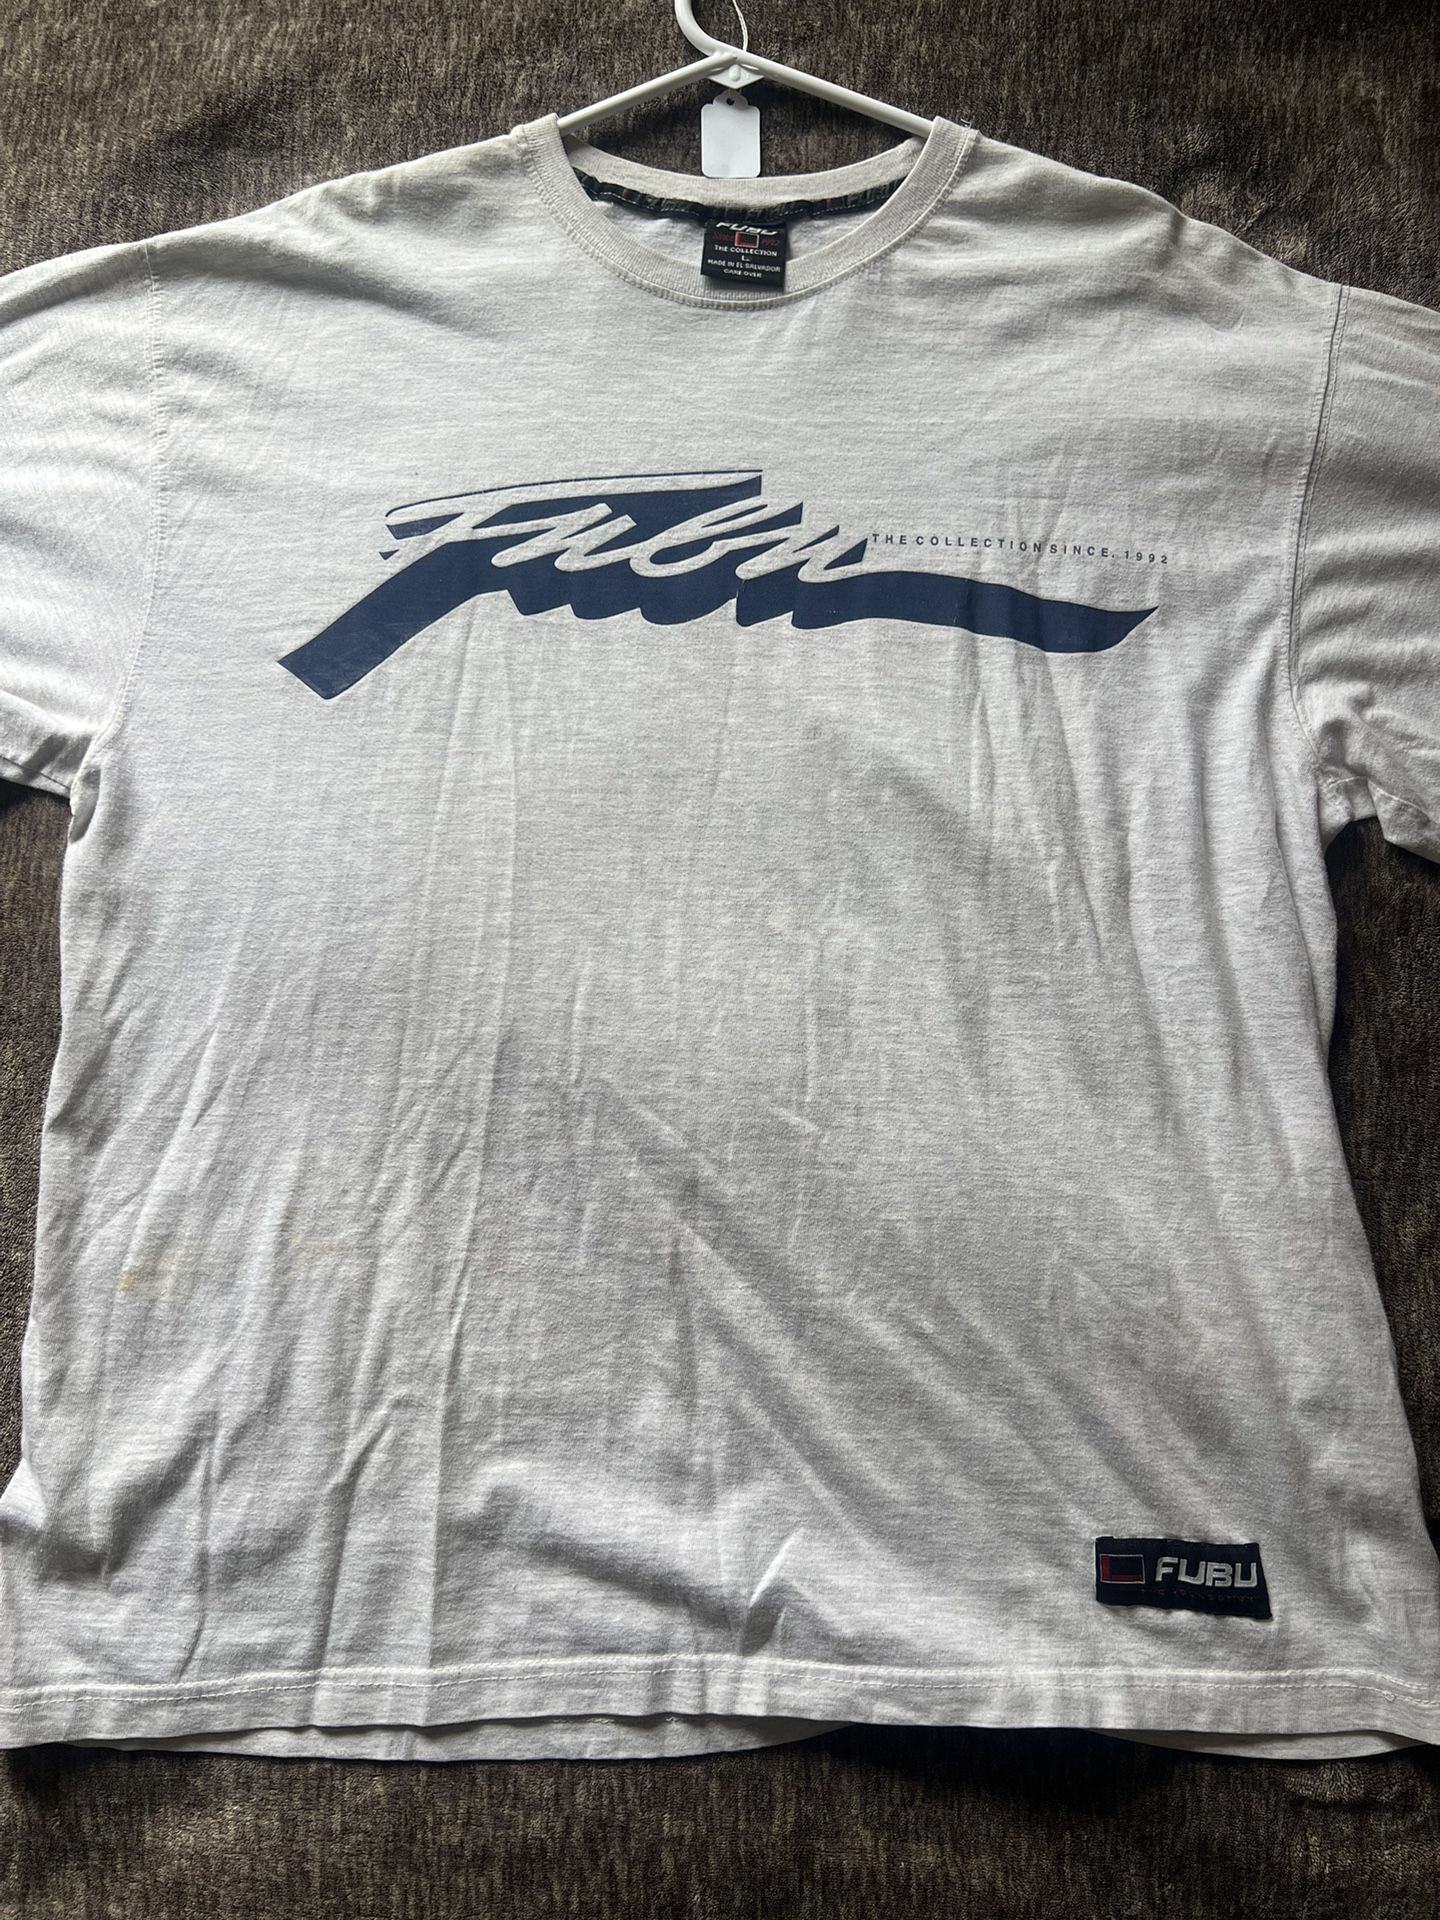 Fubu Y2k Shirt